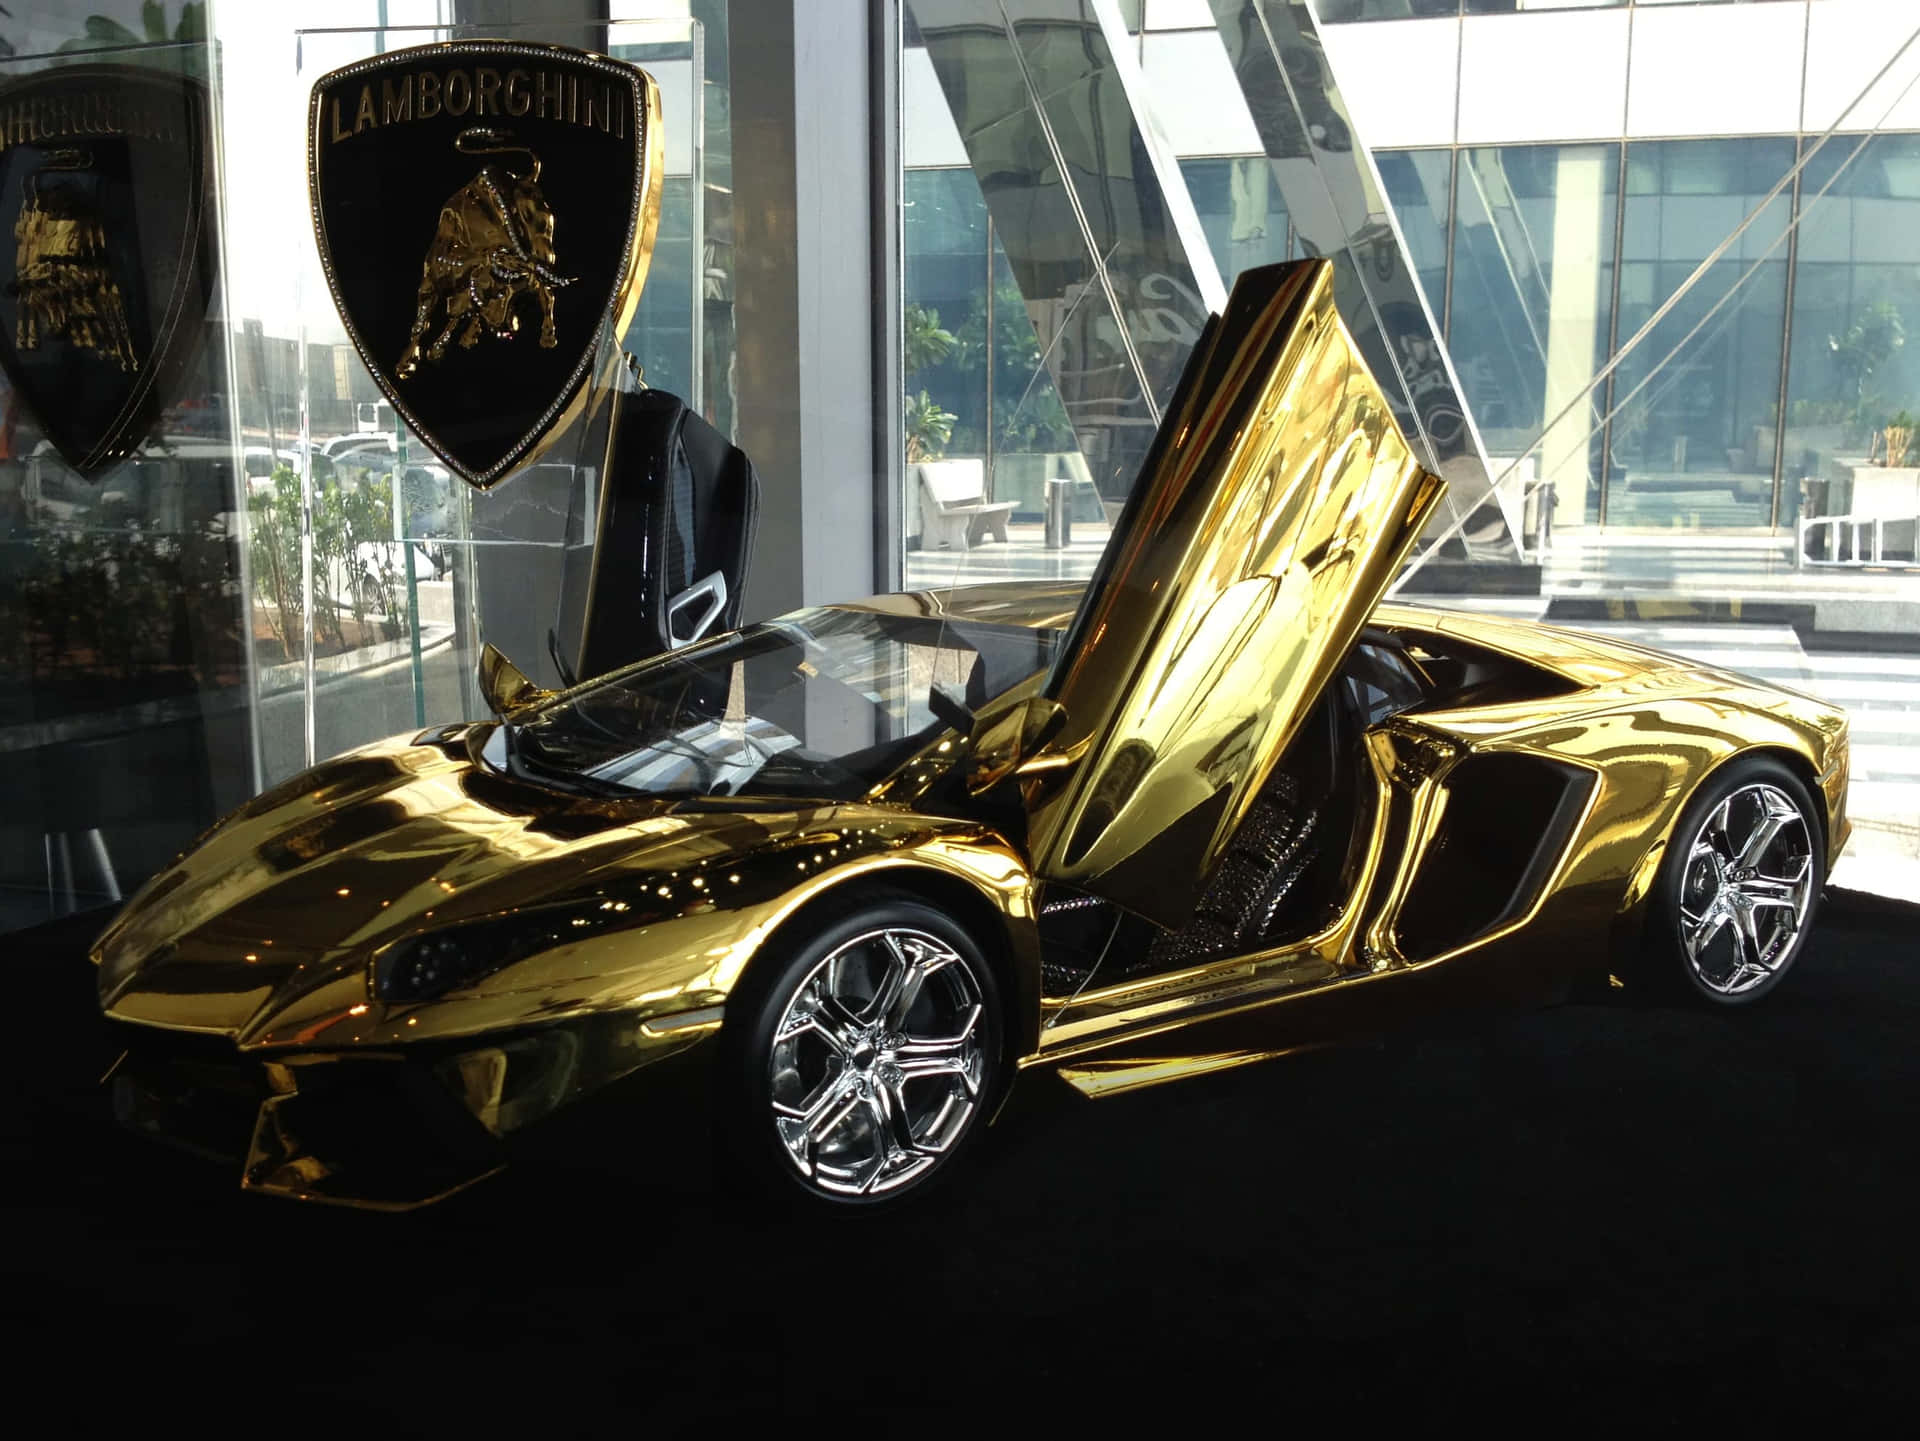 a gold lamborghini sports car is on display in a showroom